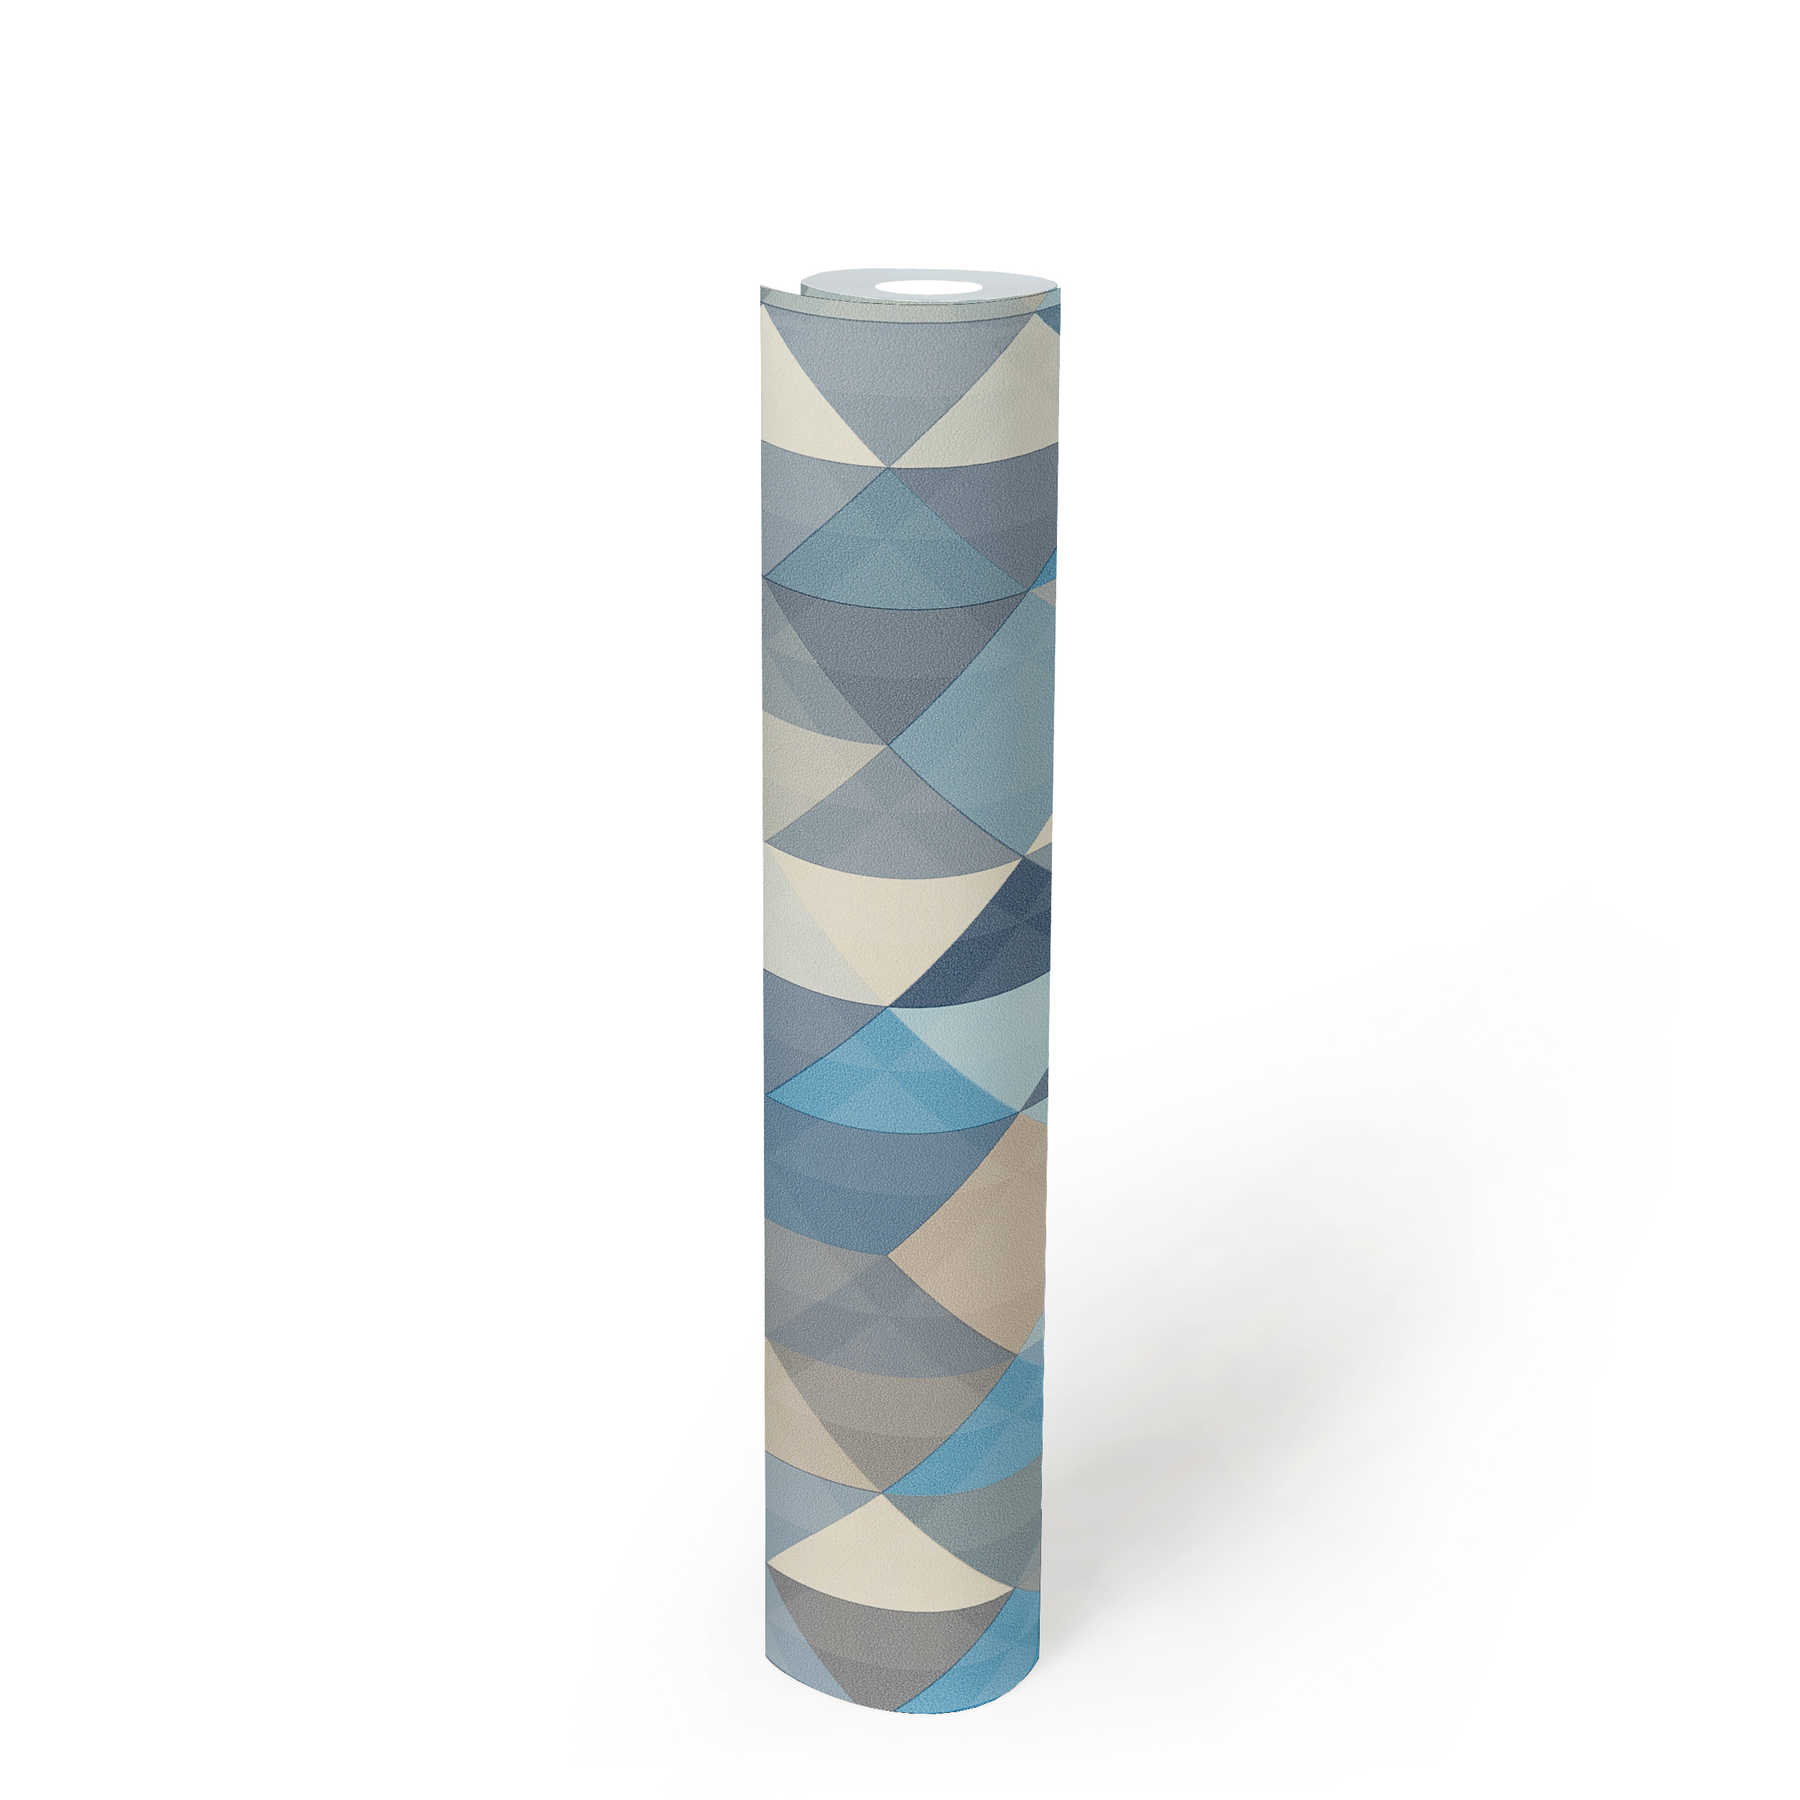             Tapete Scandinavian Style mit geometrischem Muster – Blau, Grau, Beige
        